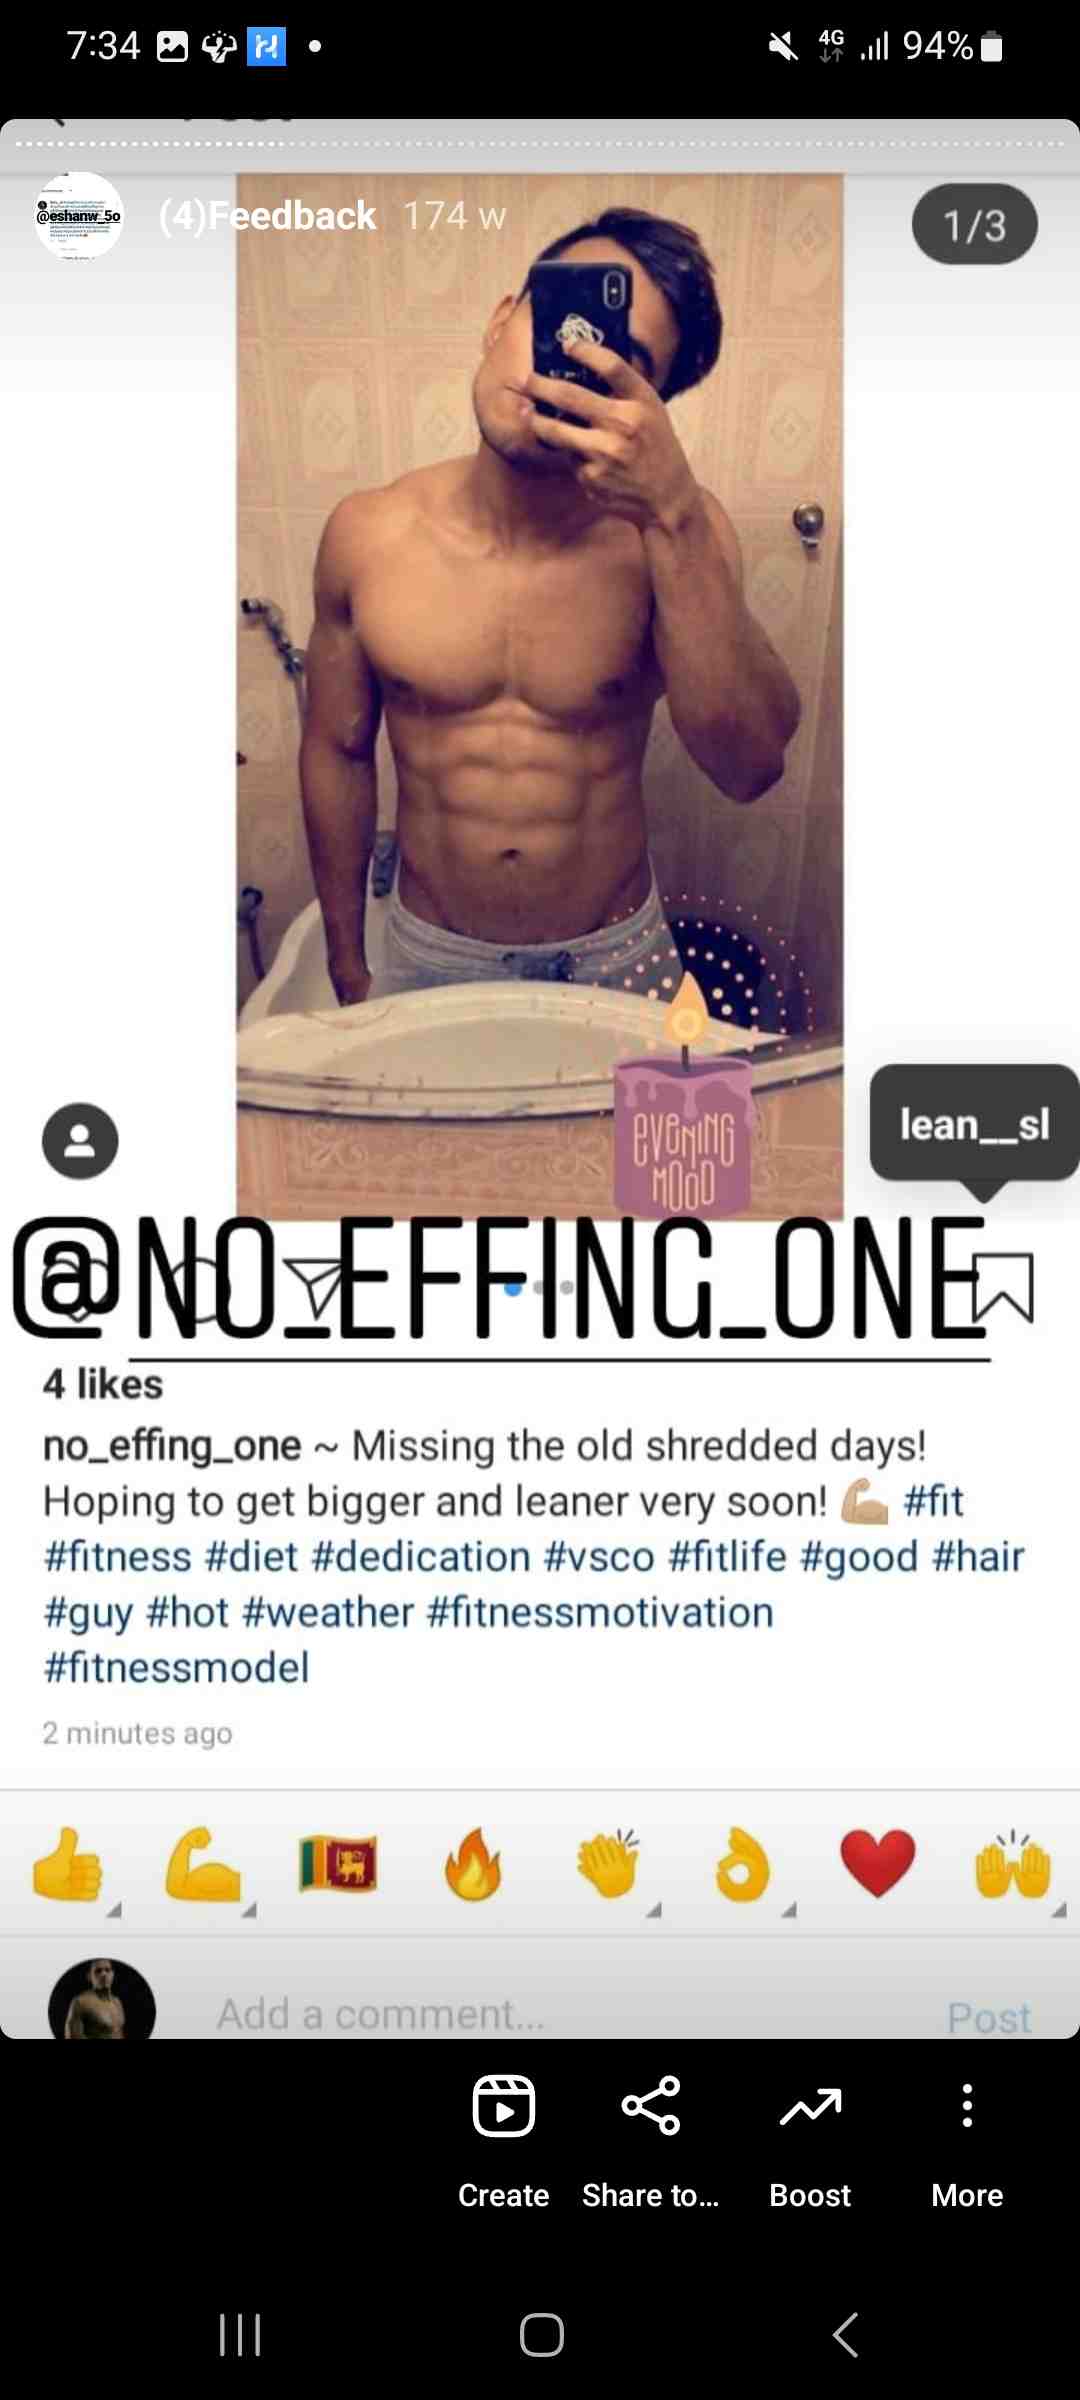 top fitness instagram accounts, fitness instagram stories, fitness hashtags on instagram